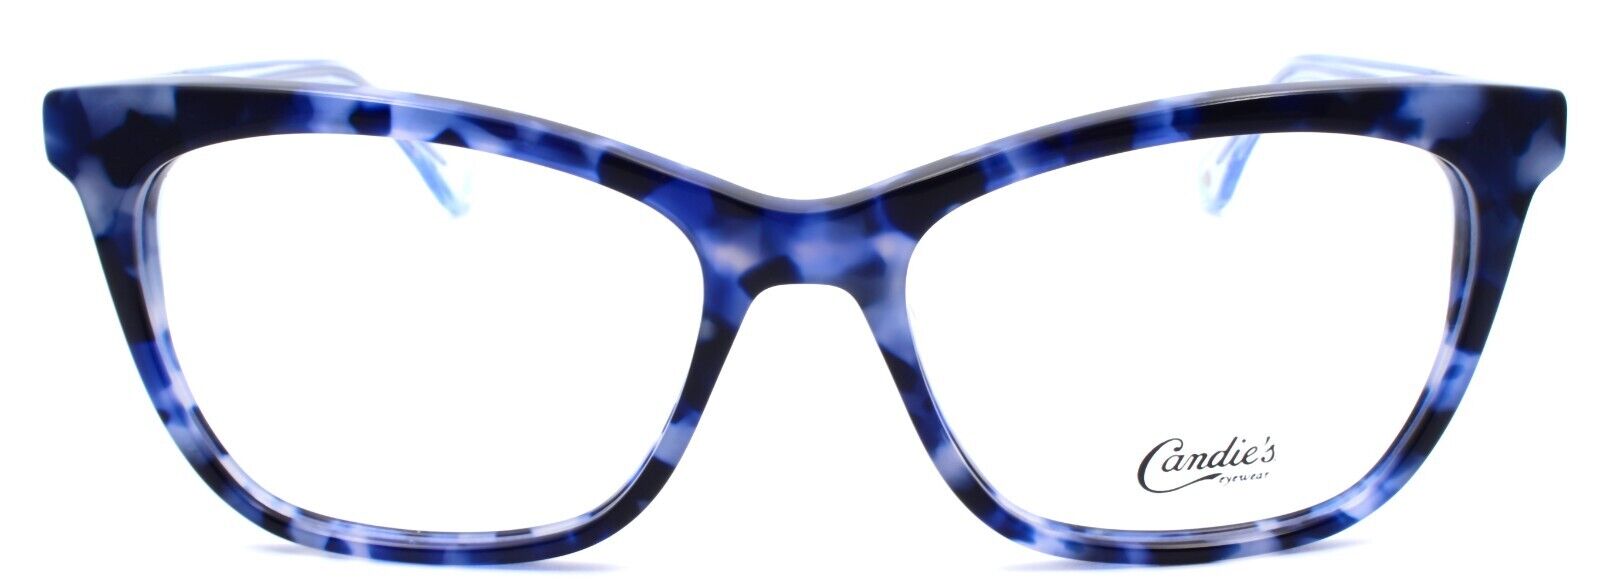 2-Candies CA0175 092 Women's Eyeglasses Frames 53-16-140 Blue-889214067029-IKSpecs